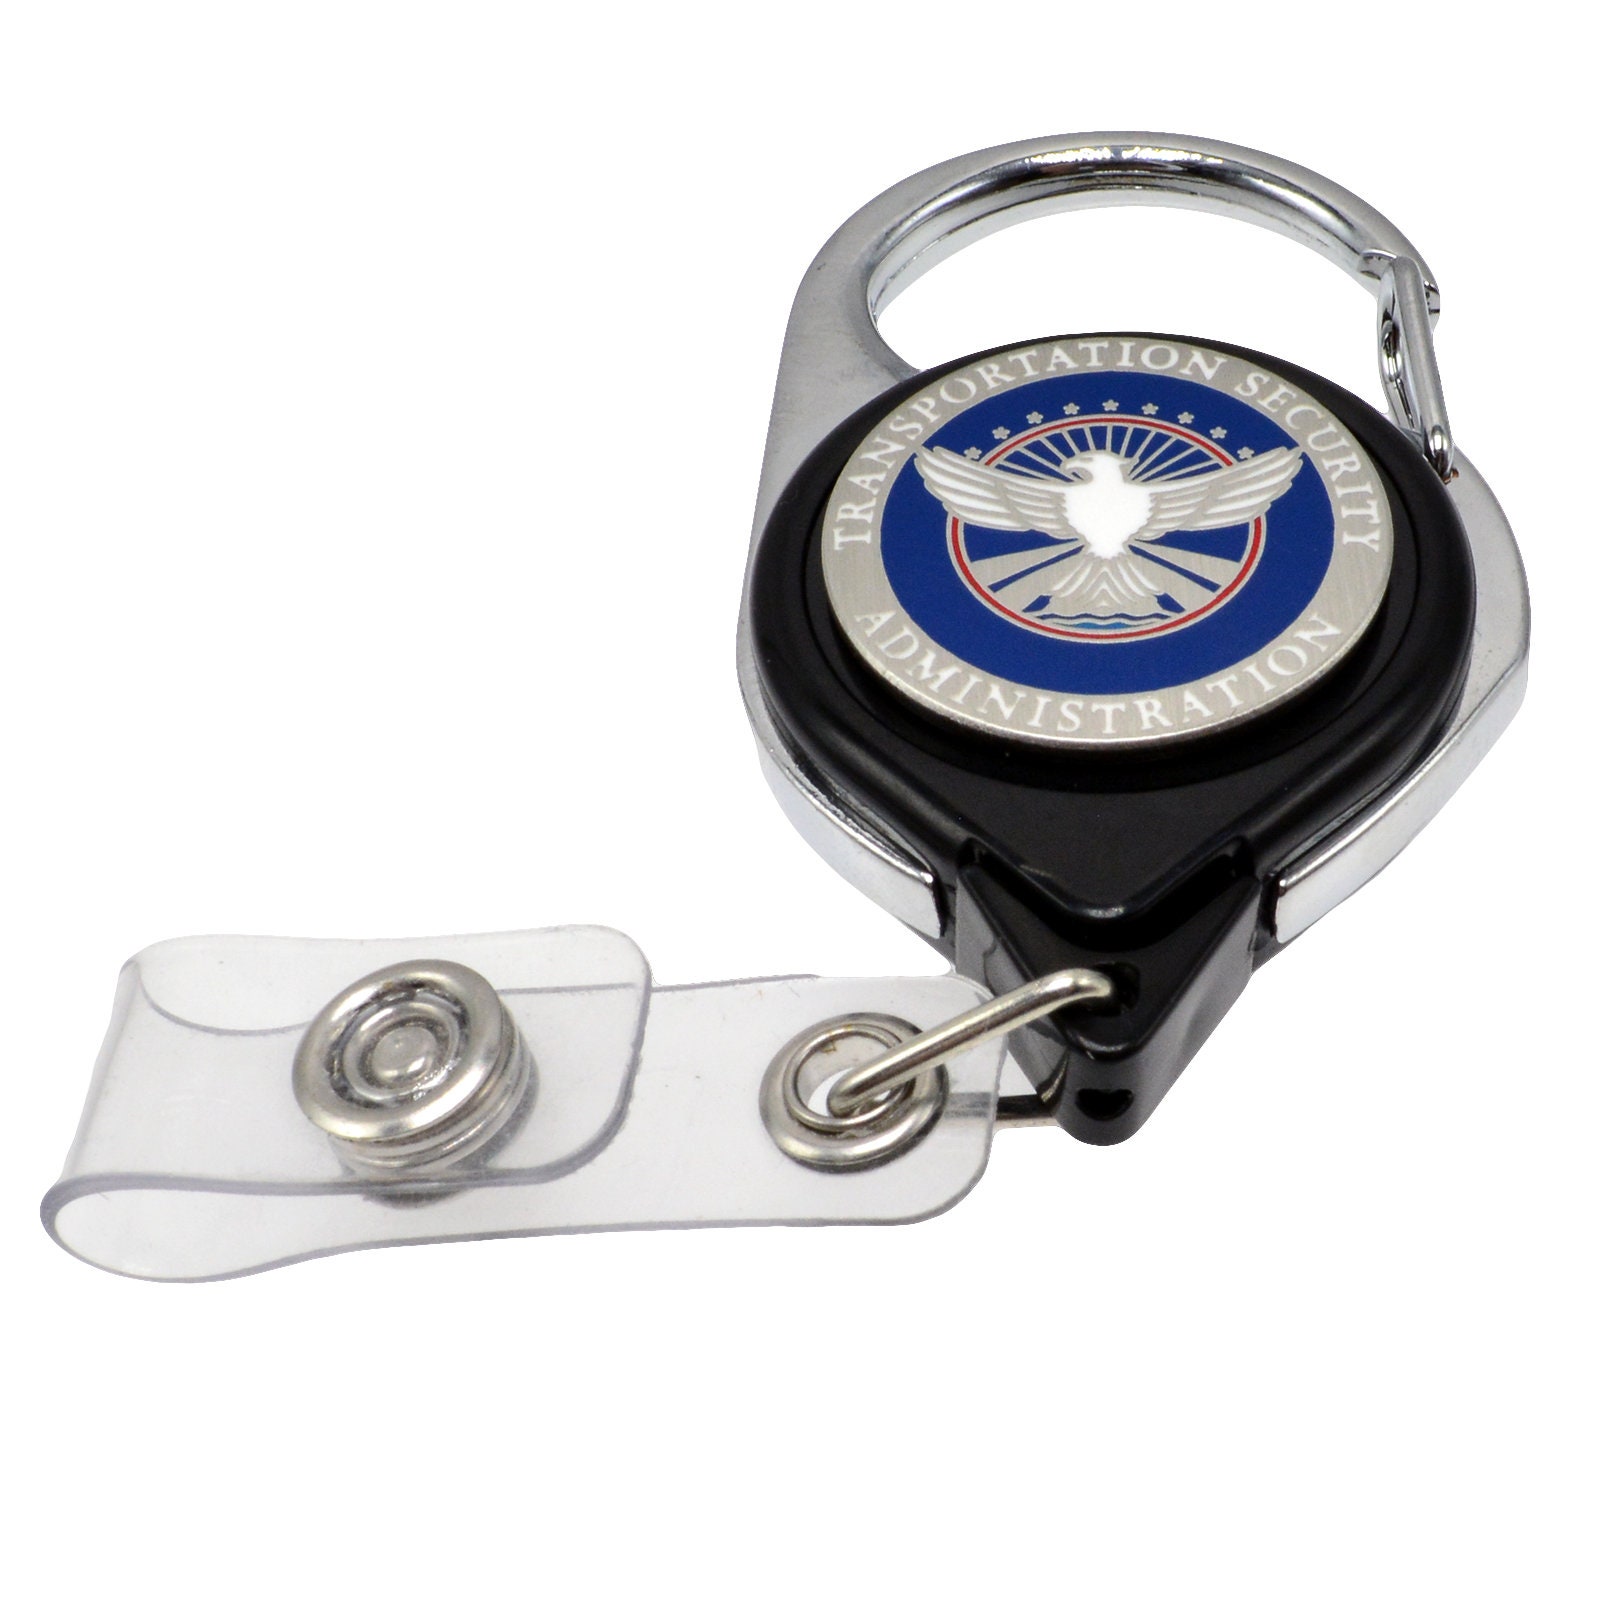 TSA Officer Patch Carabiner Retractable Badge Reel ID Holder Key